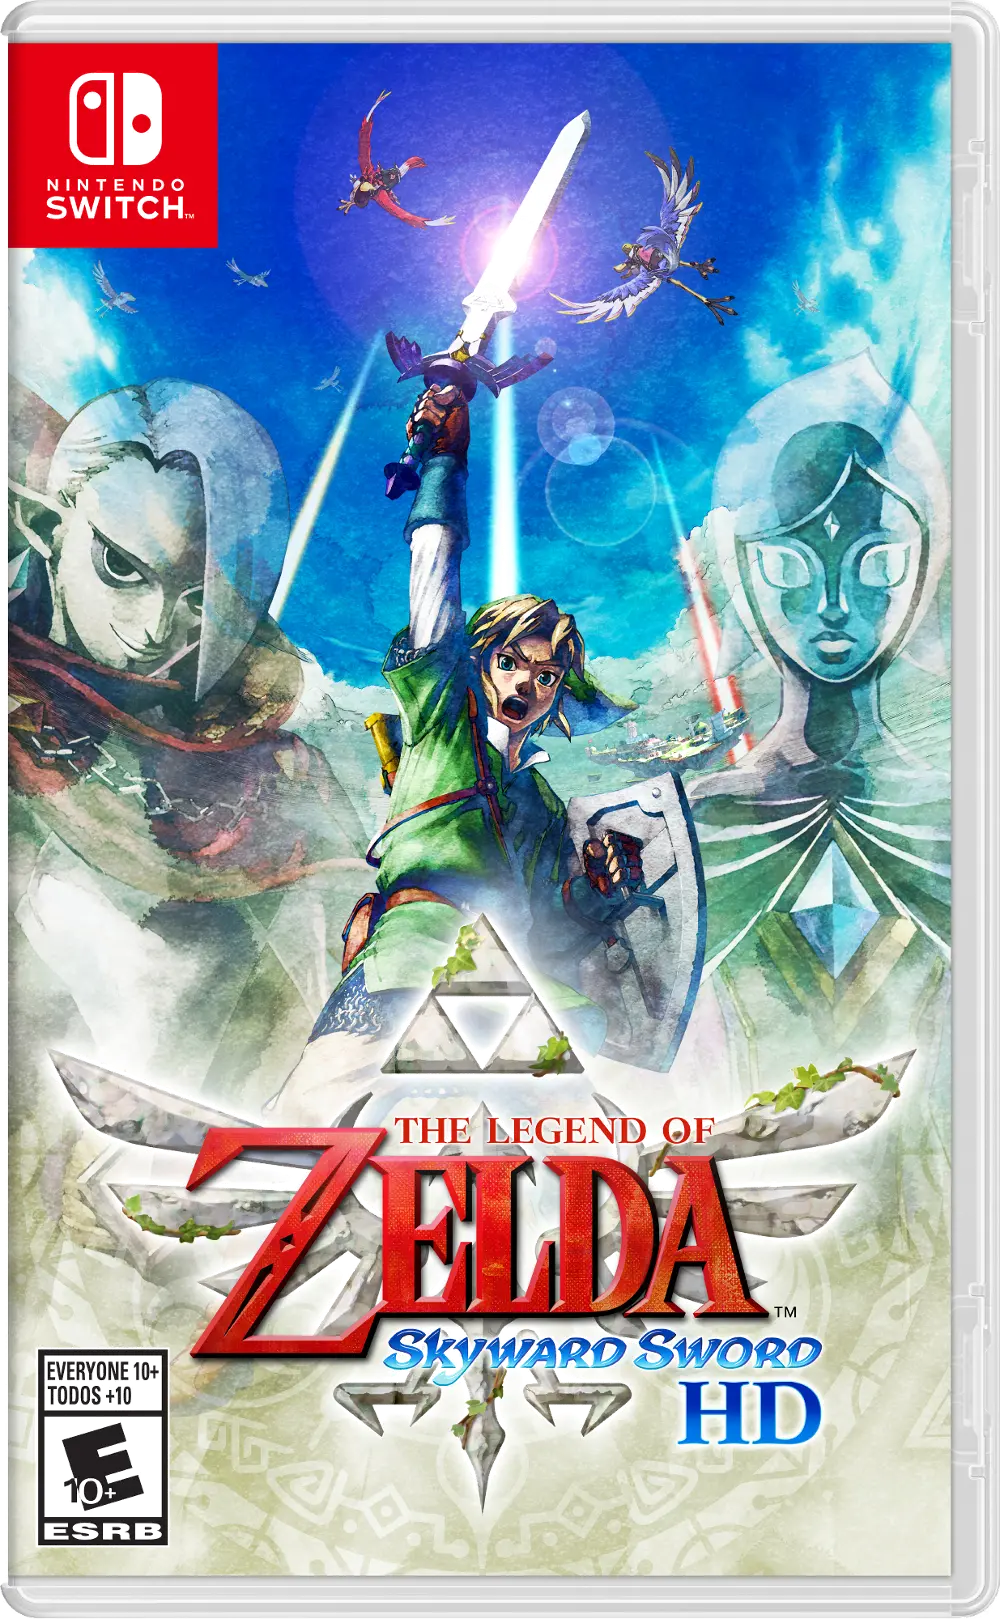 SWI/ZELDA,SKYSWORDHD The Legend of Zelda: Skyward Sword HD - Nintendo Switch-1